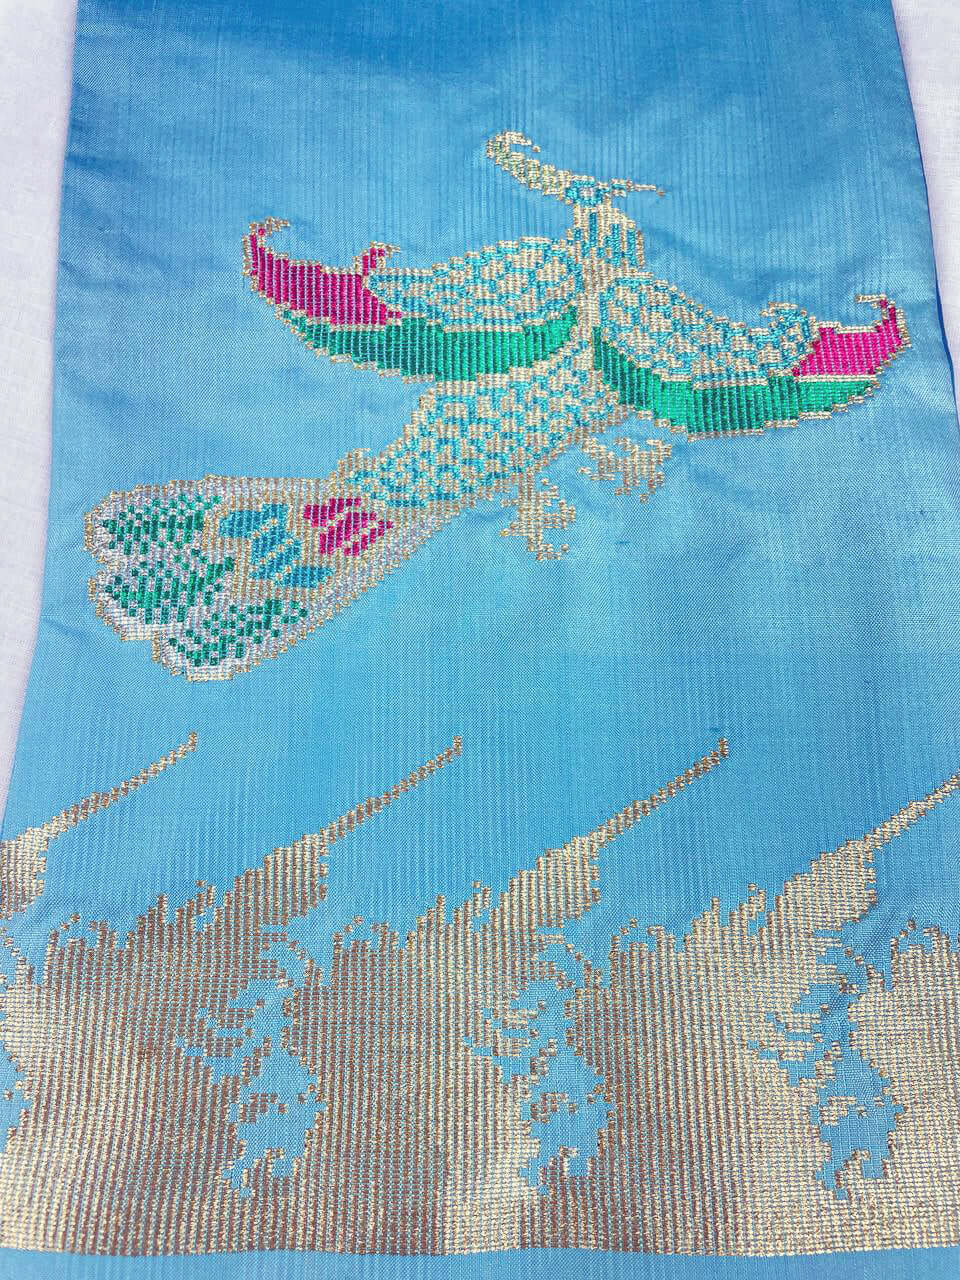 Cenderawasih Baby Blue(Fuchsia) handwoven silk songket shawl textile